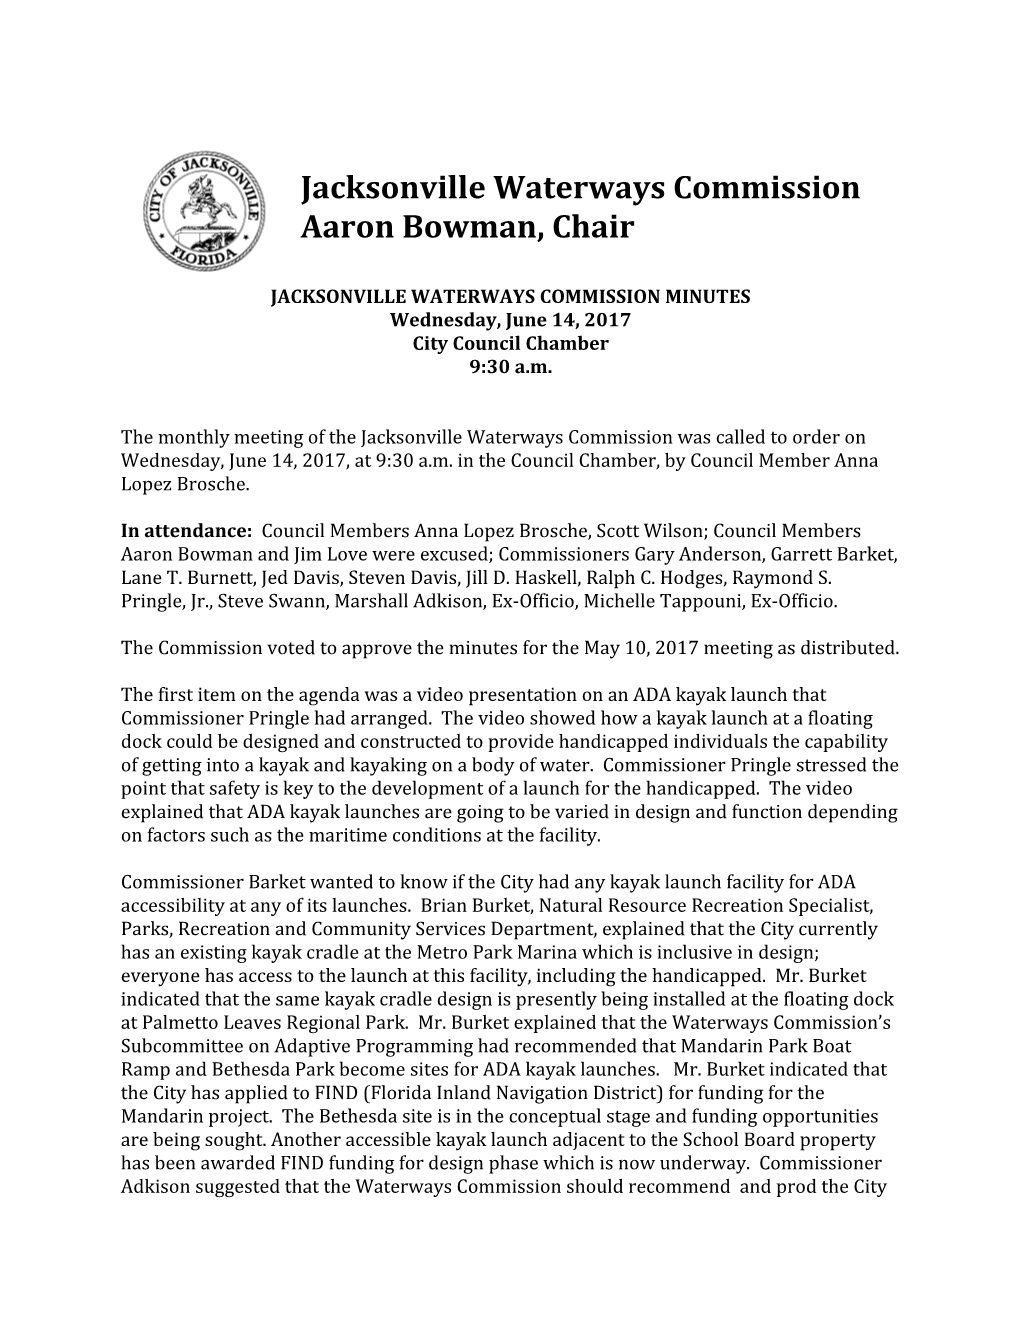 Jacksonville Waterways Commission Minutes